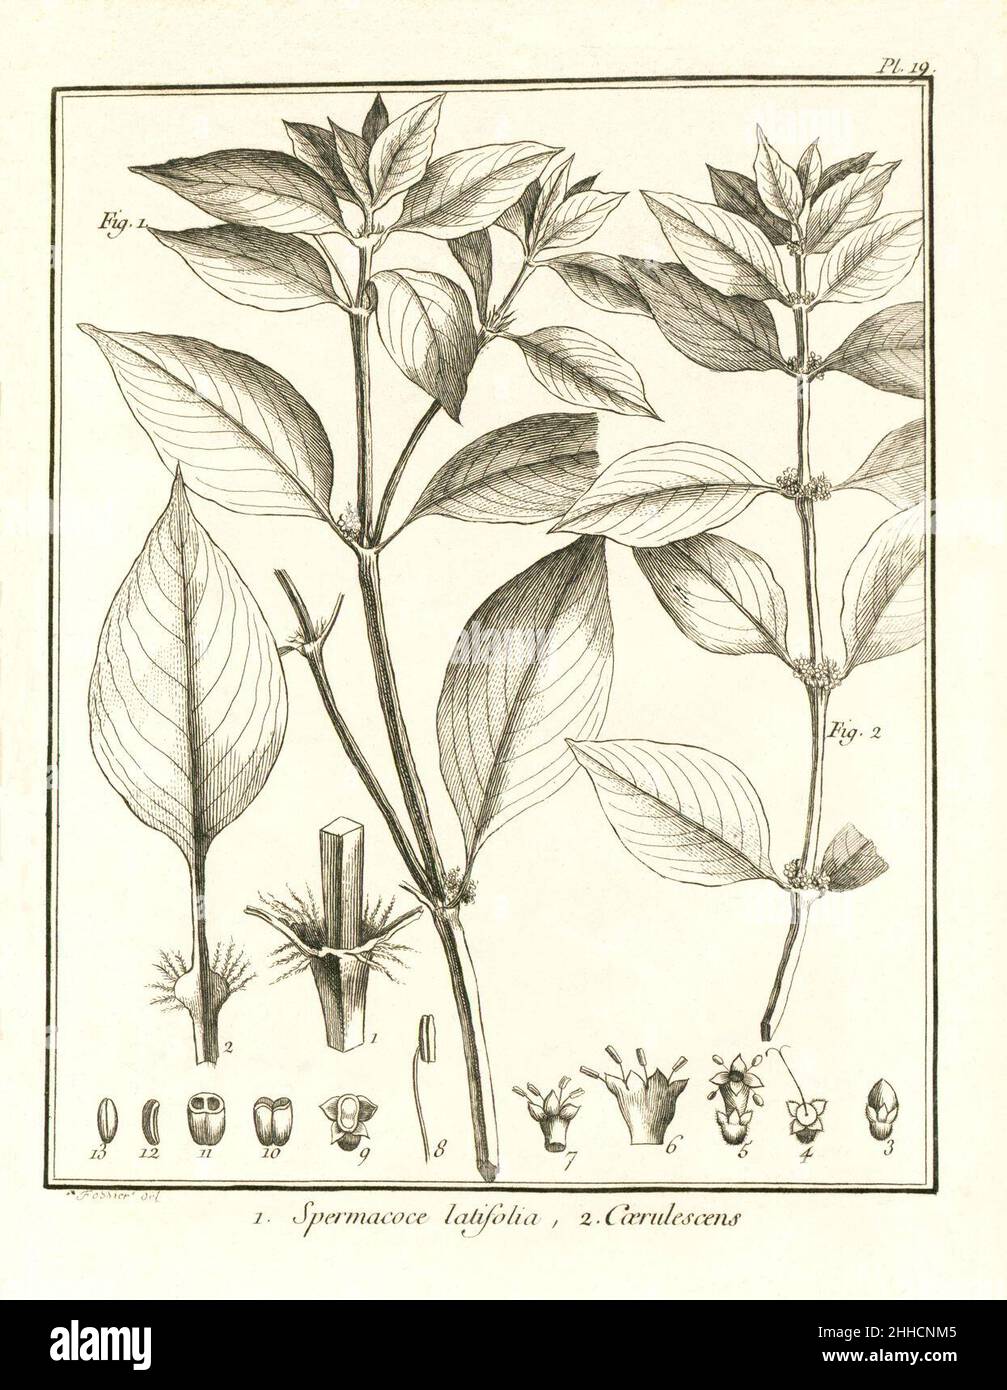 Spermacoce latifolia - cærulescens Aublet 1775 pl 19. Stock Photo